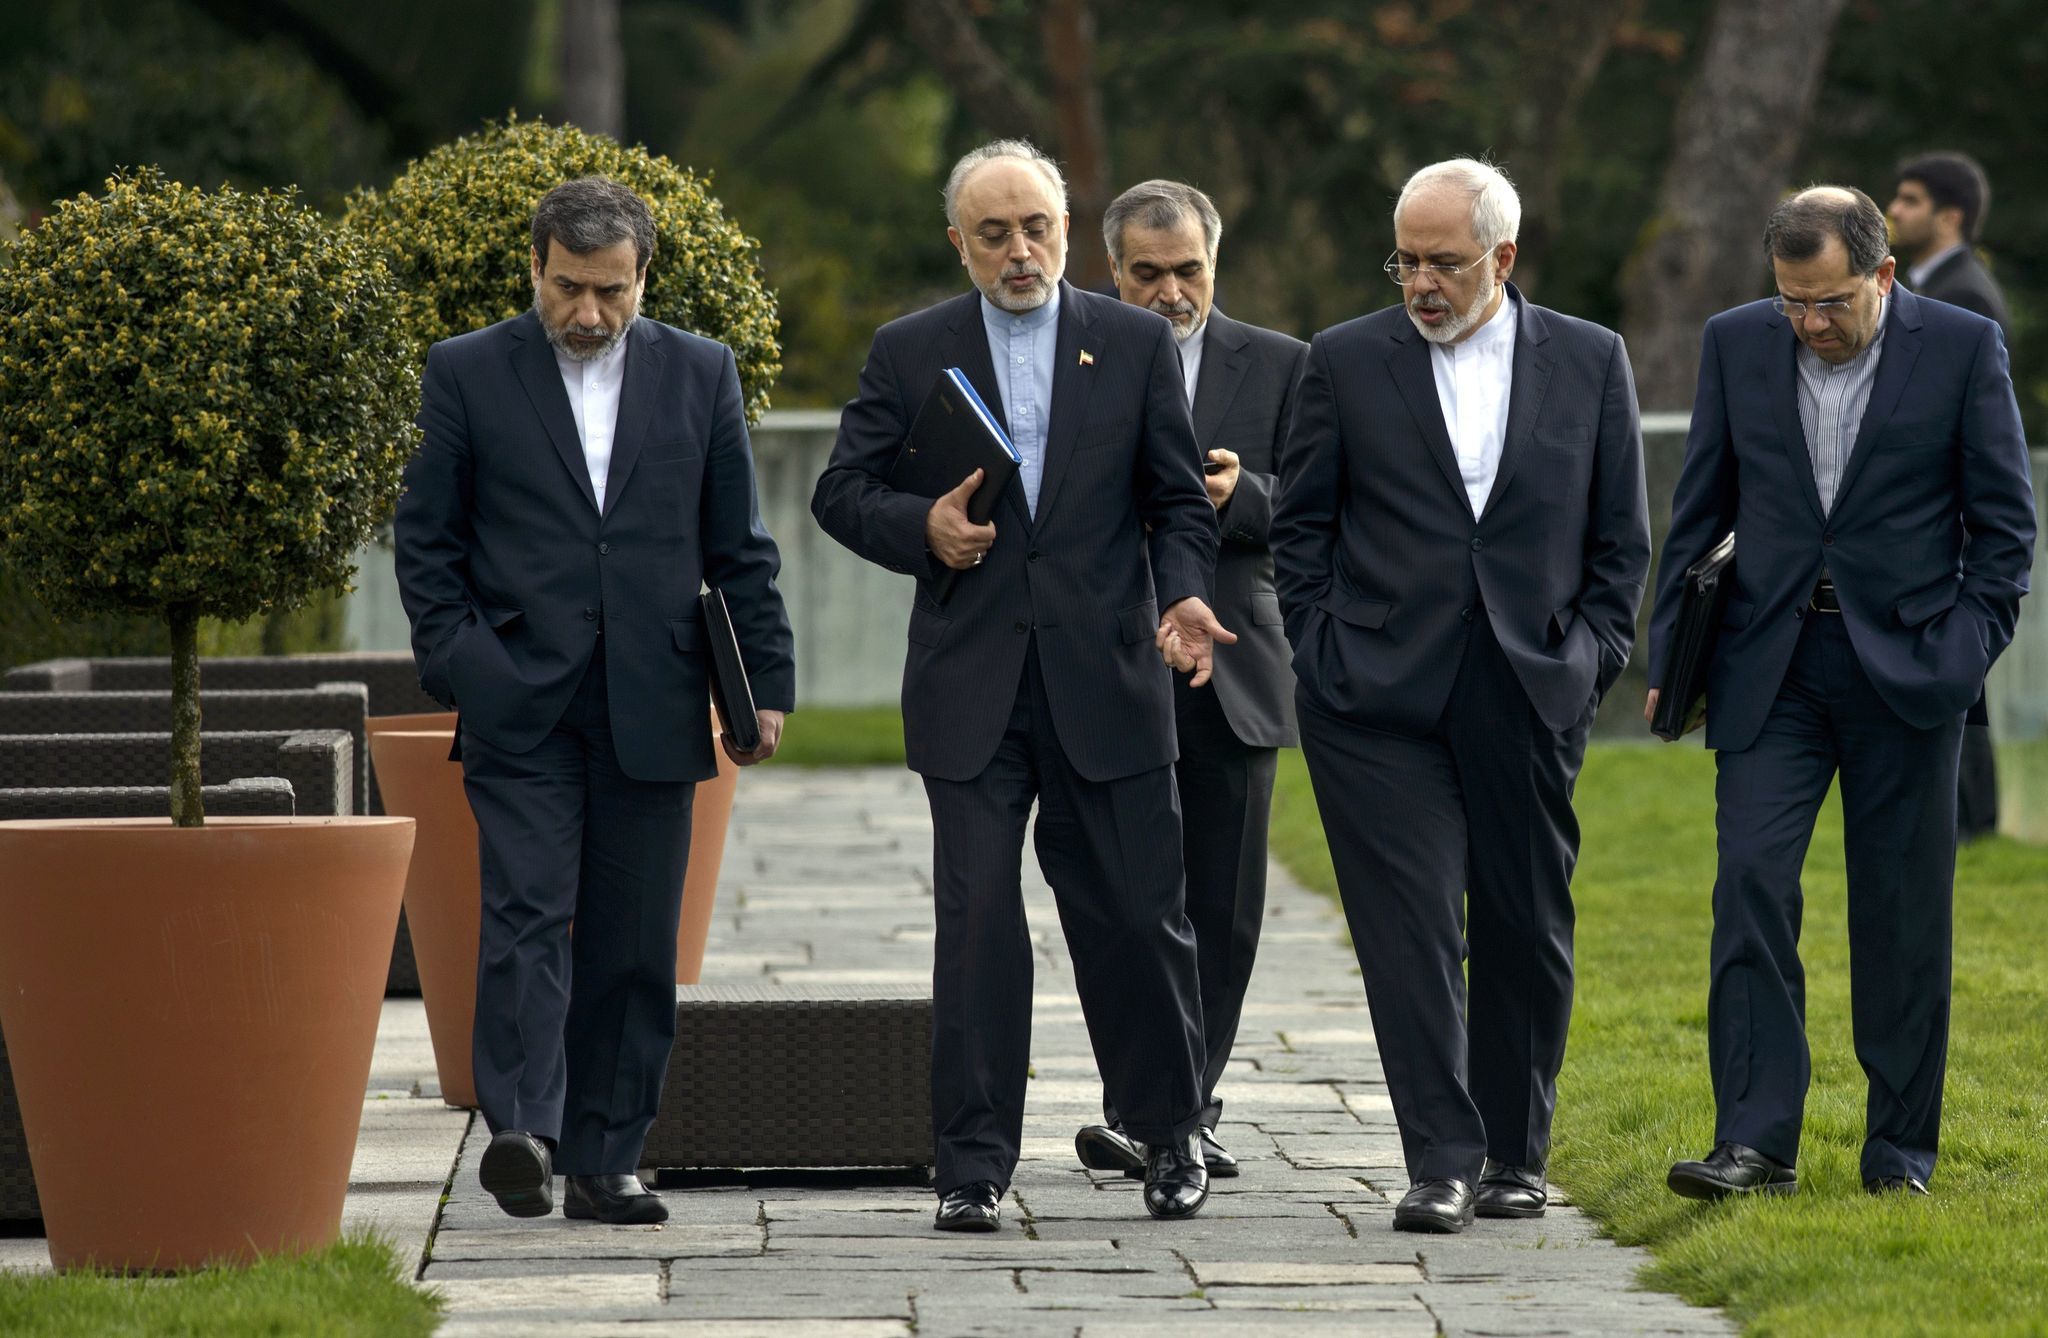 Benefits Of Iran Nuclear Program